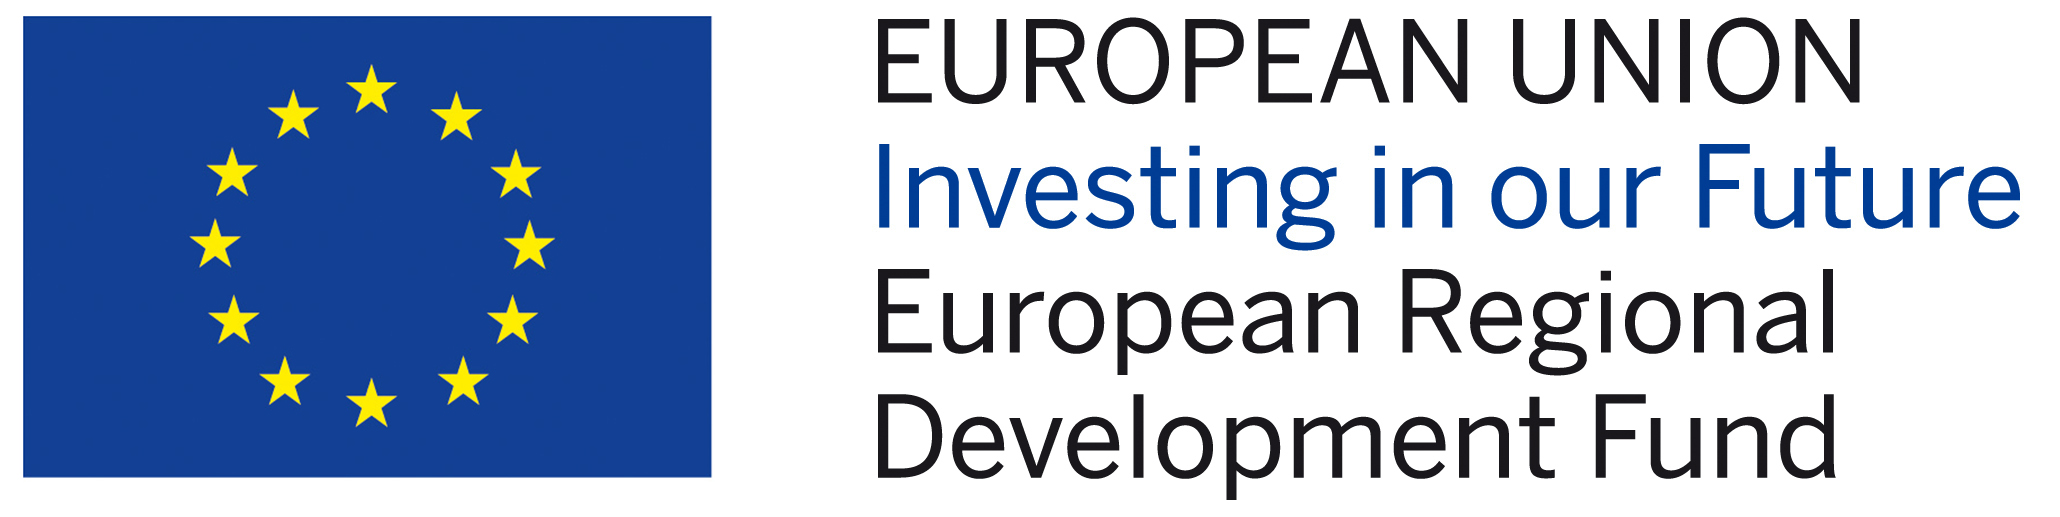 Logo from the European Union